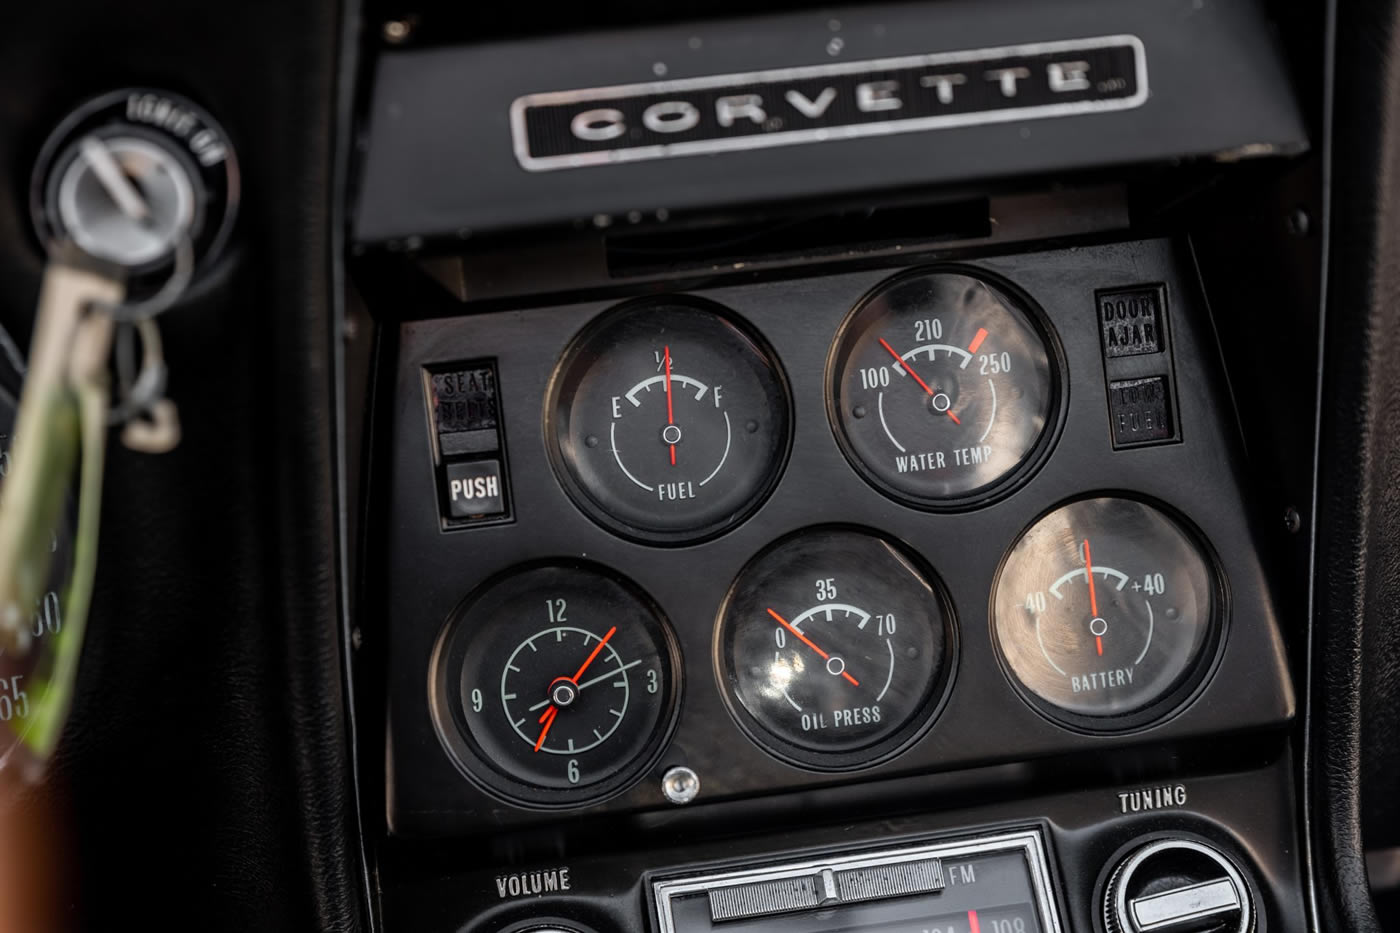 1968 Corvette Convertible in Cordovan Maroon